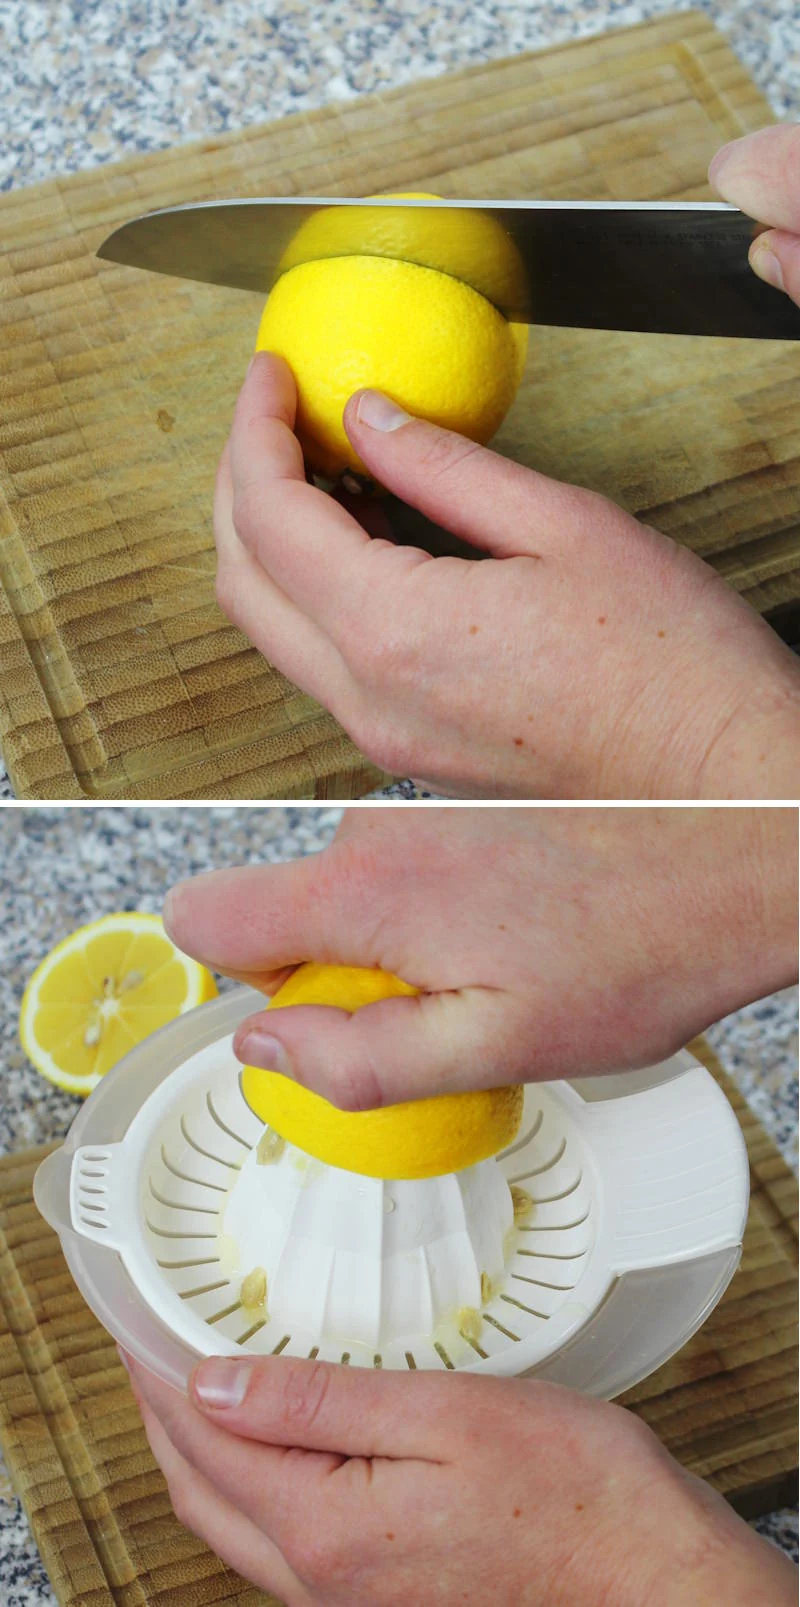 Shogayu Ingwertee Schritt 5 Zitronensaft auspressen